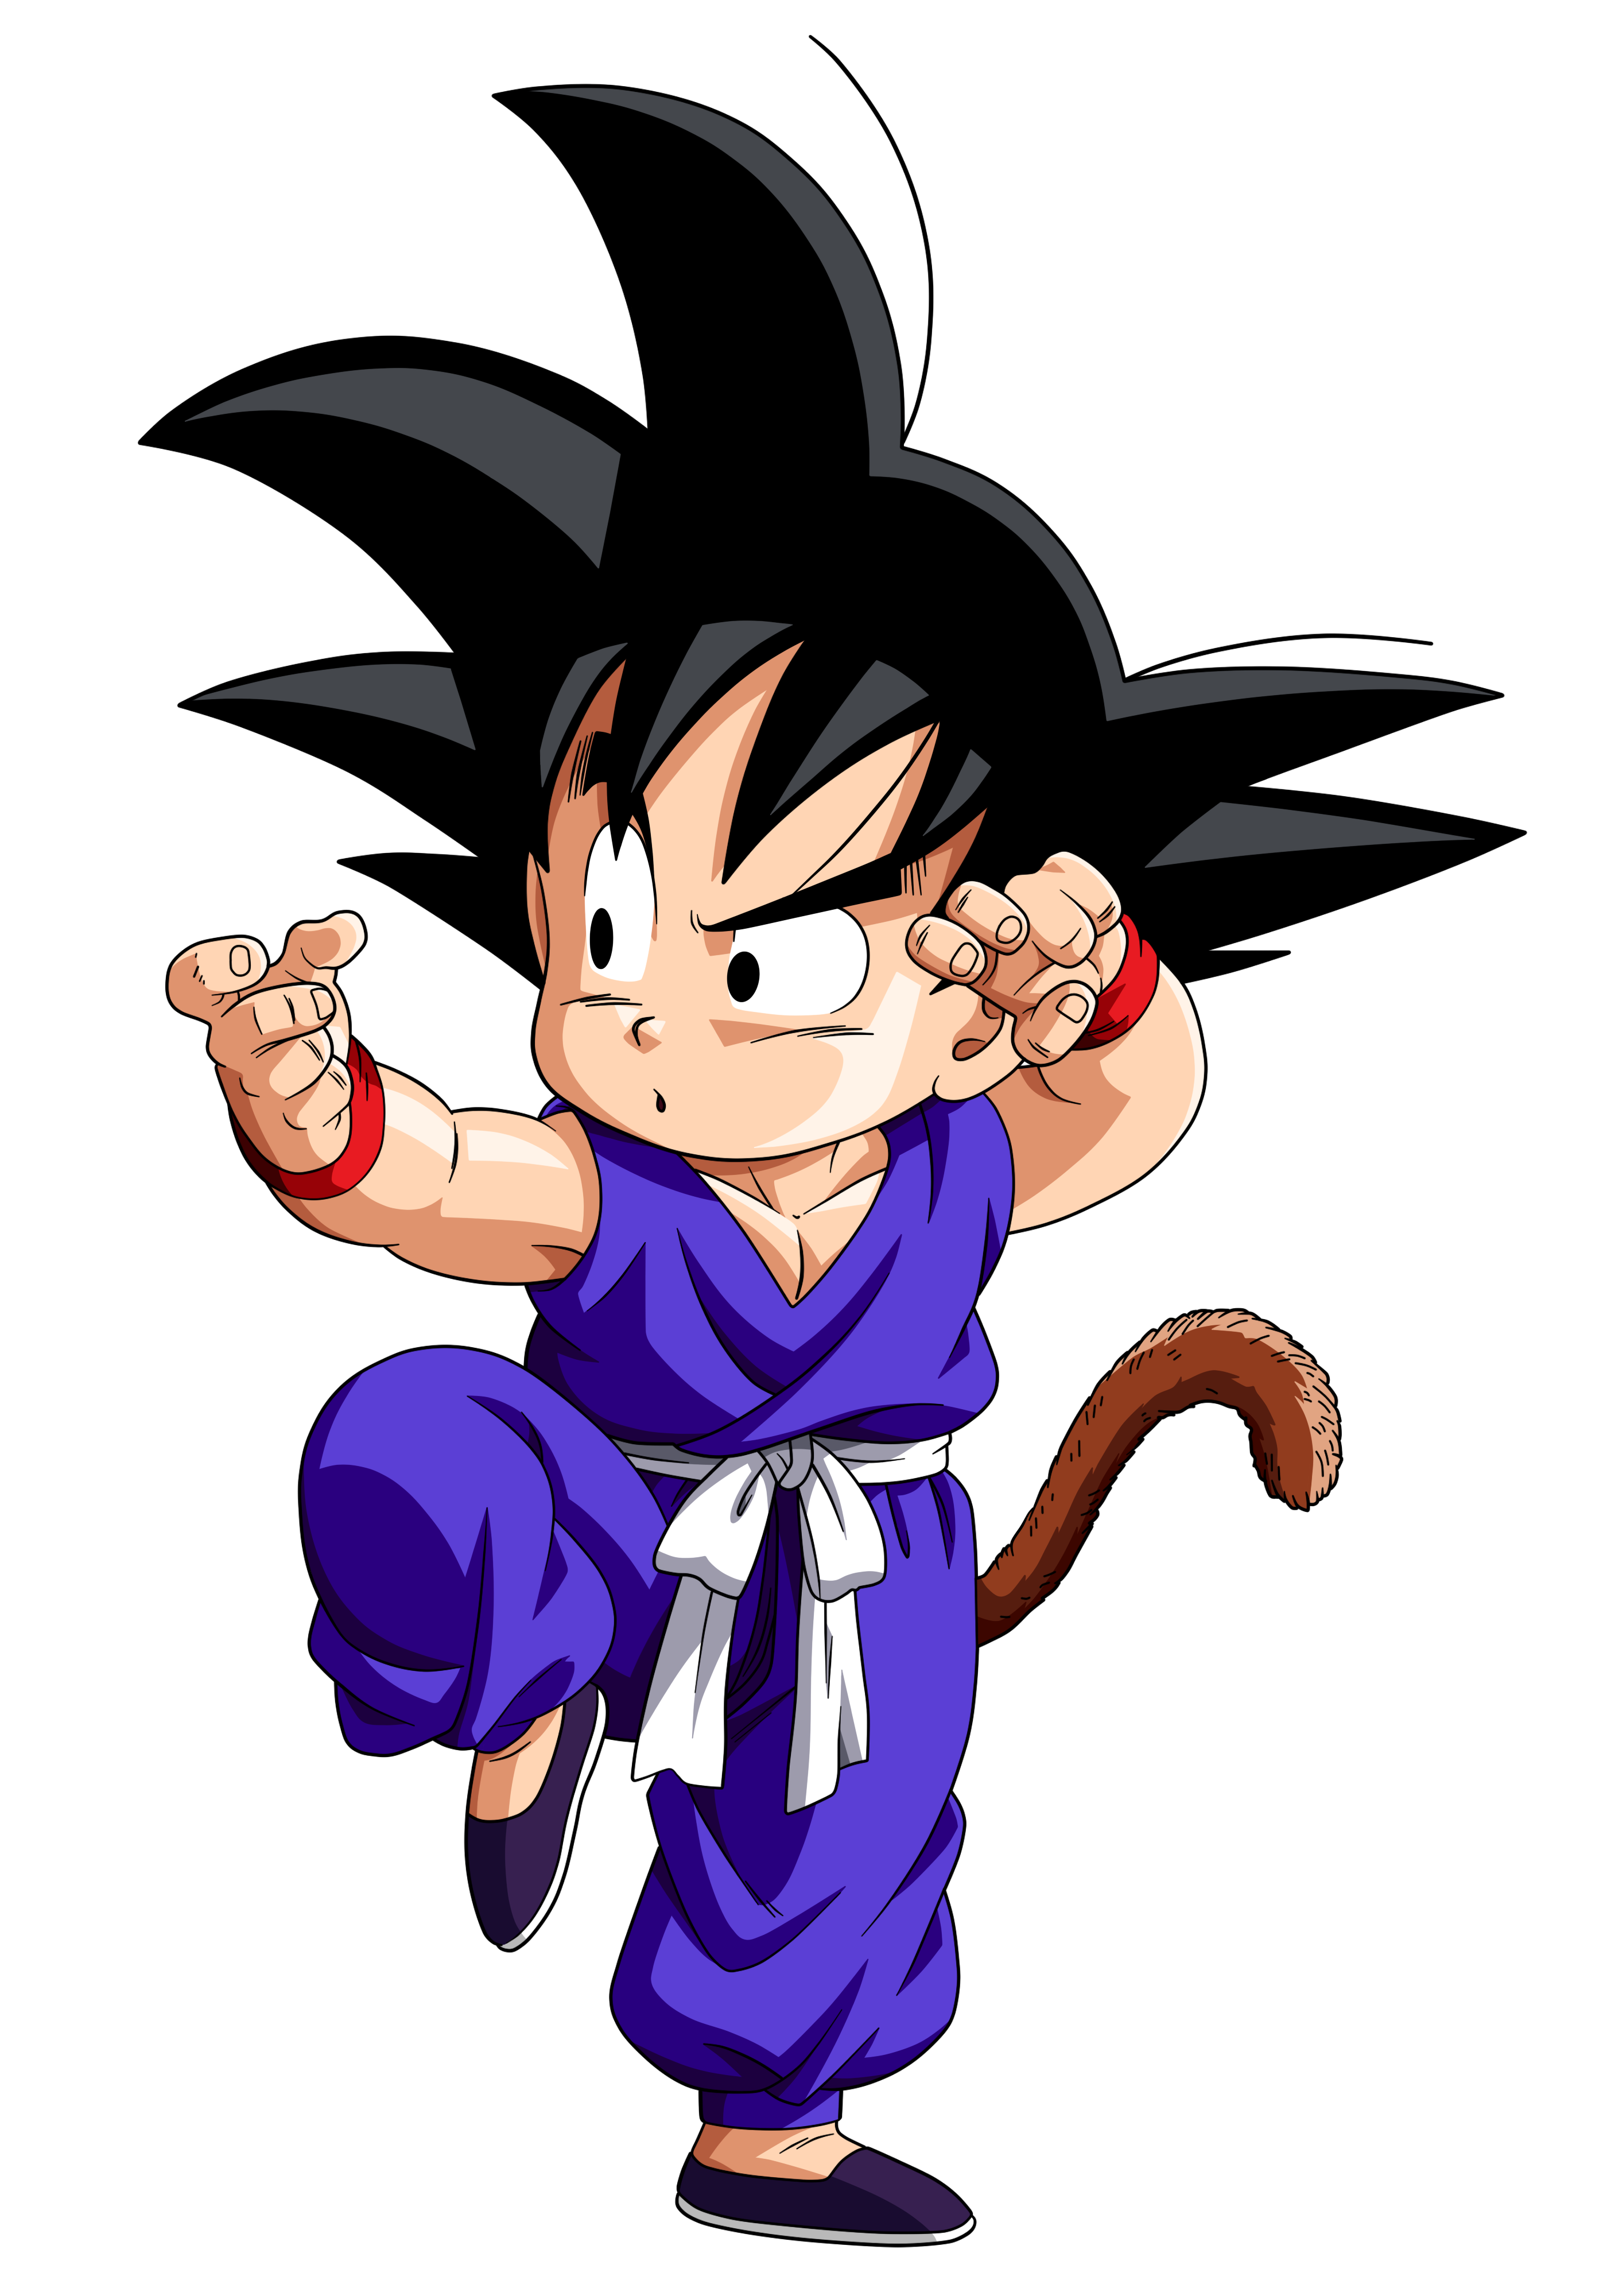 Goku kid pose combate Dragon Ball by Widdirit on DeviantArt